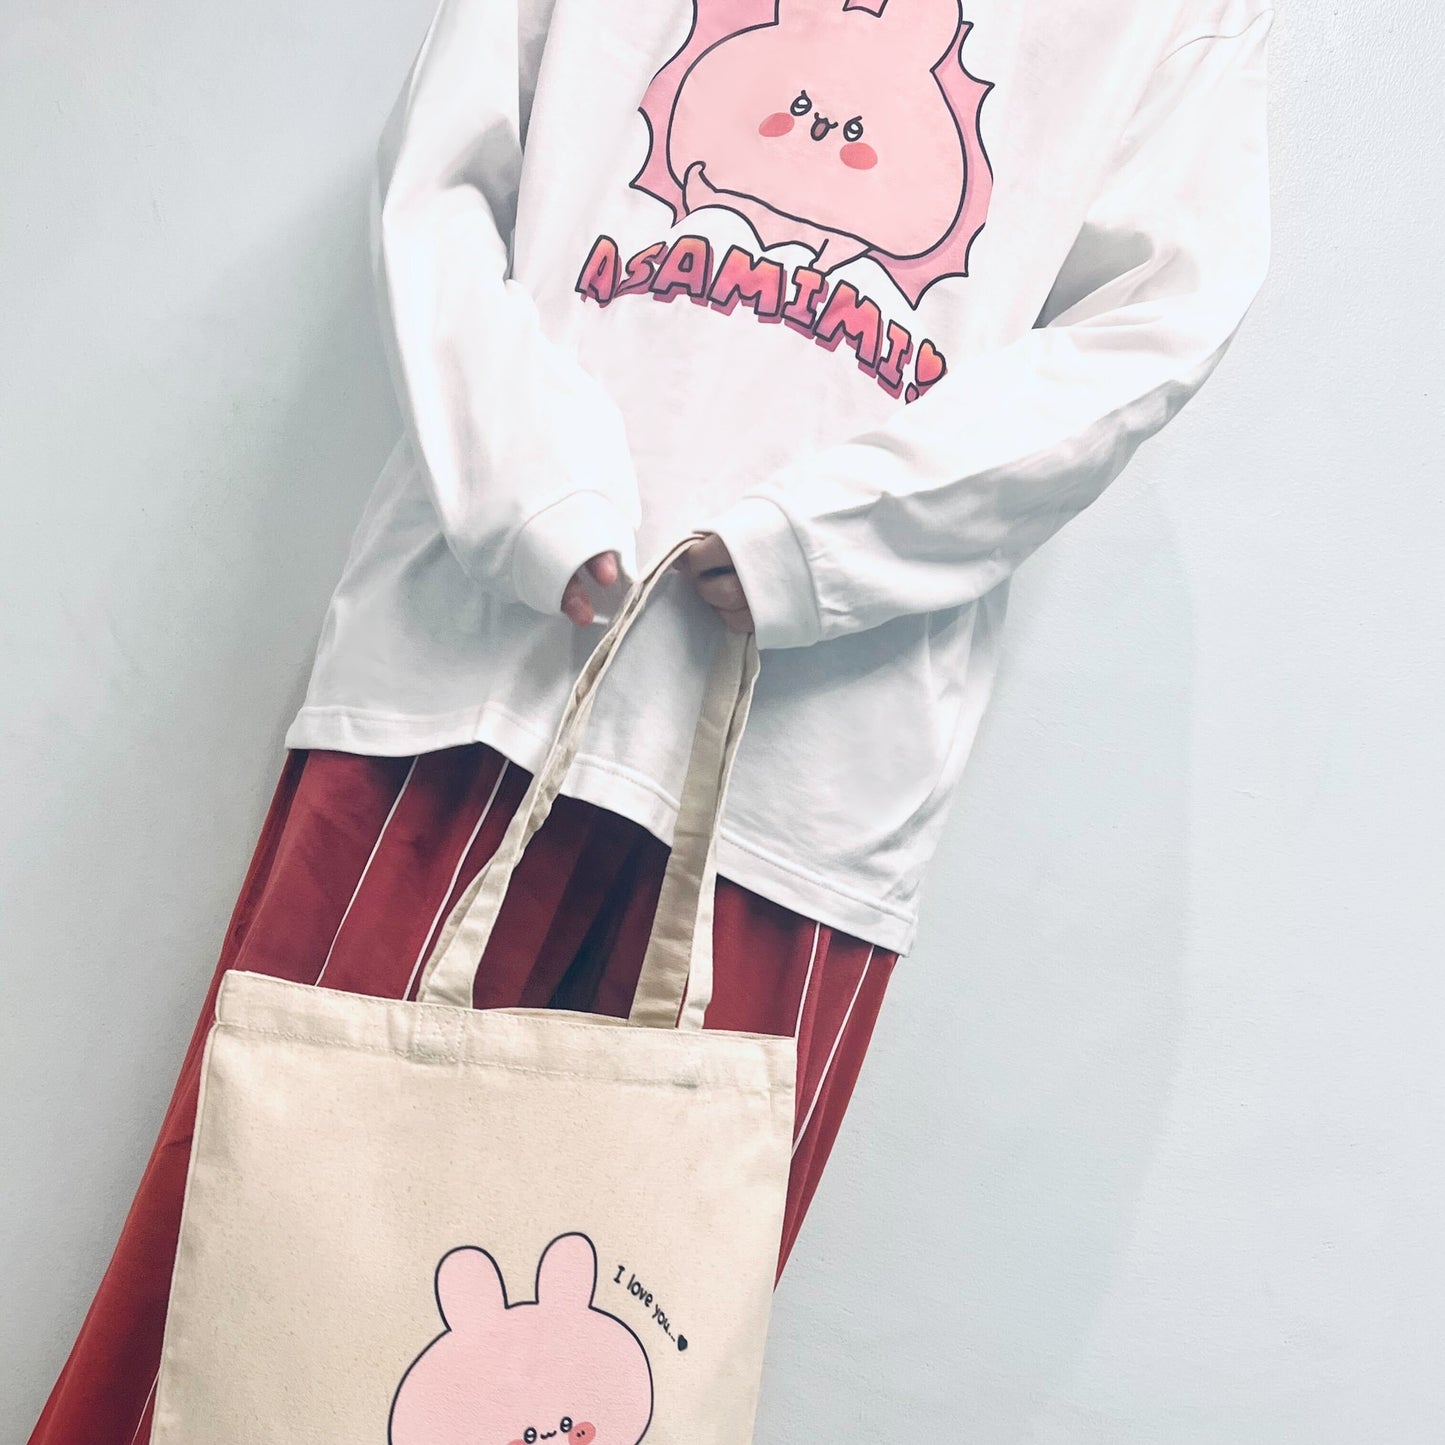 [Asamimi-chan] Pop-out ❣ Long T-shirt (Asamimi-chan popular scene Yoseatsume series) [Shipped in mid-February]